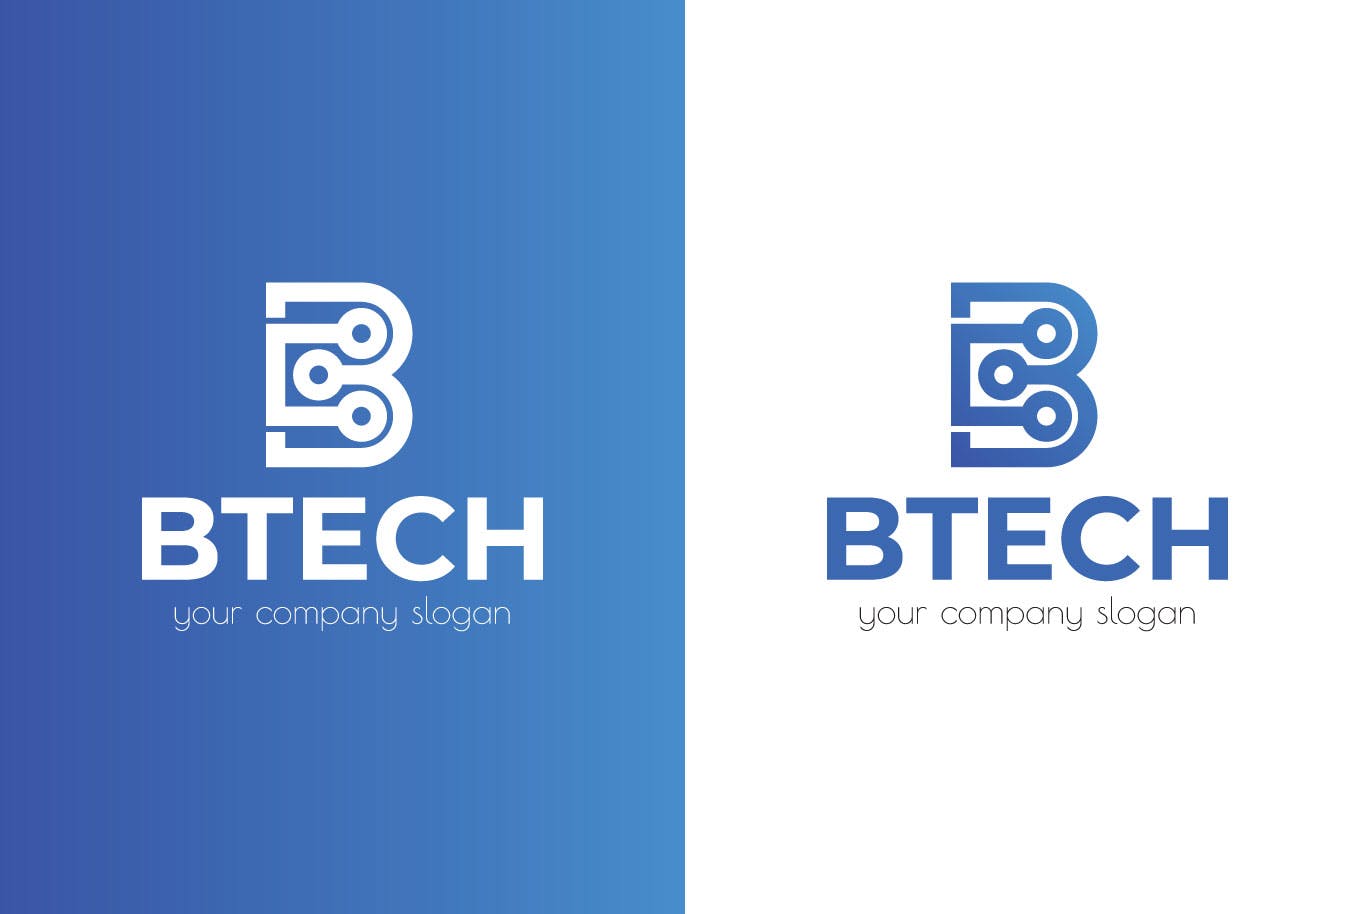 基于B字母图形的企业Logo设计非凡图库精选模板 Letter Based Business Logo Template插图(1)